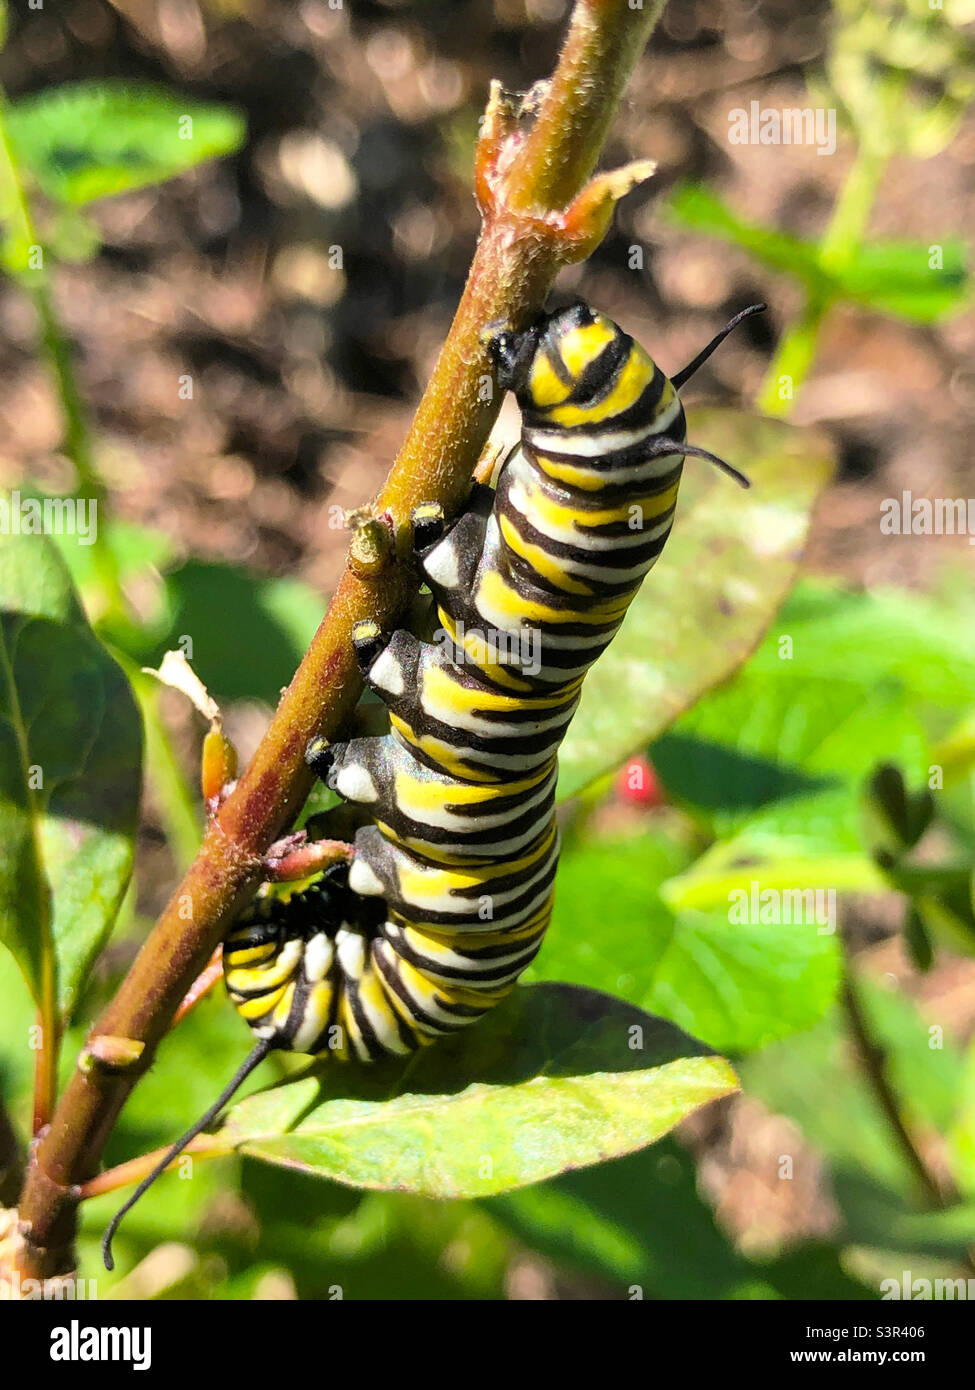 Monarch caterpillar on milkweed stem Stock Photo